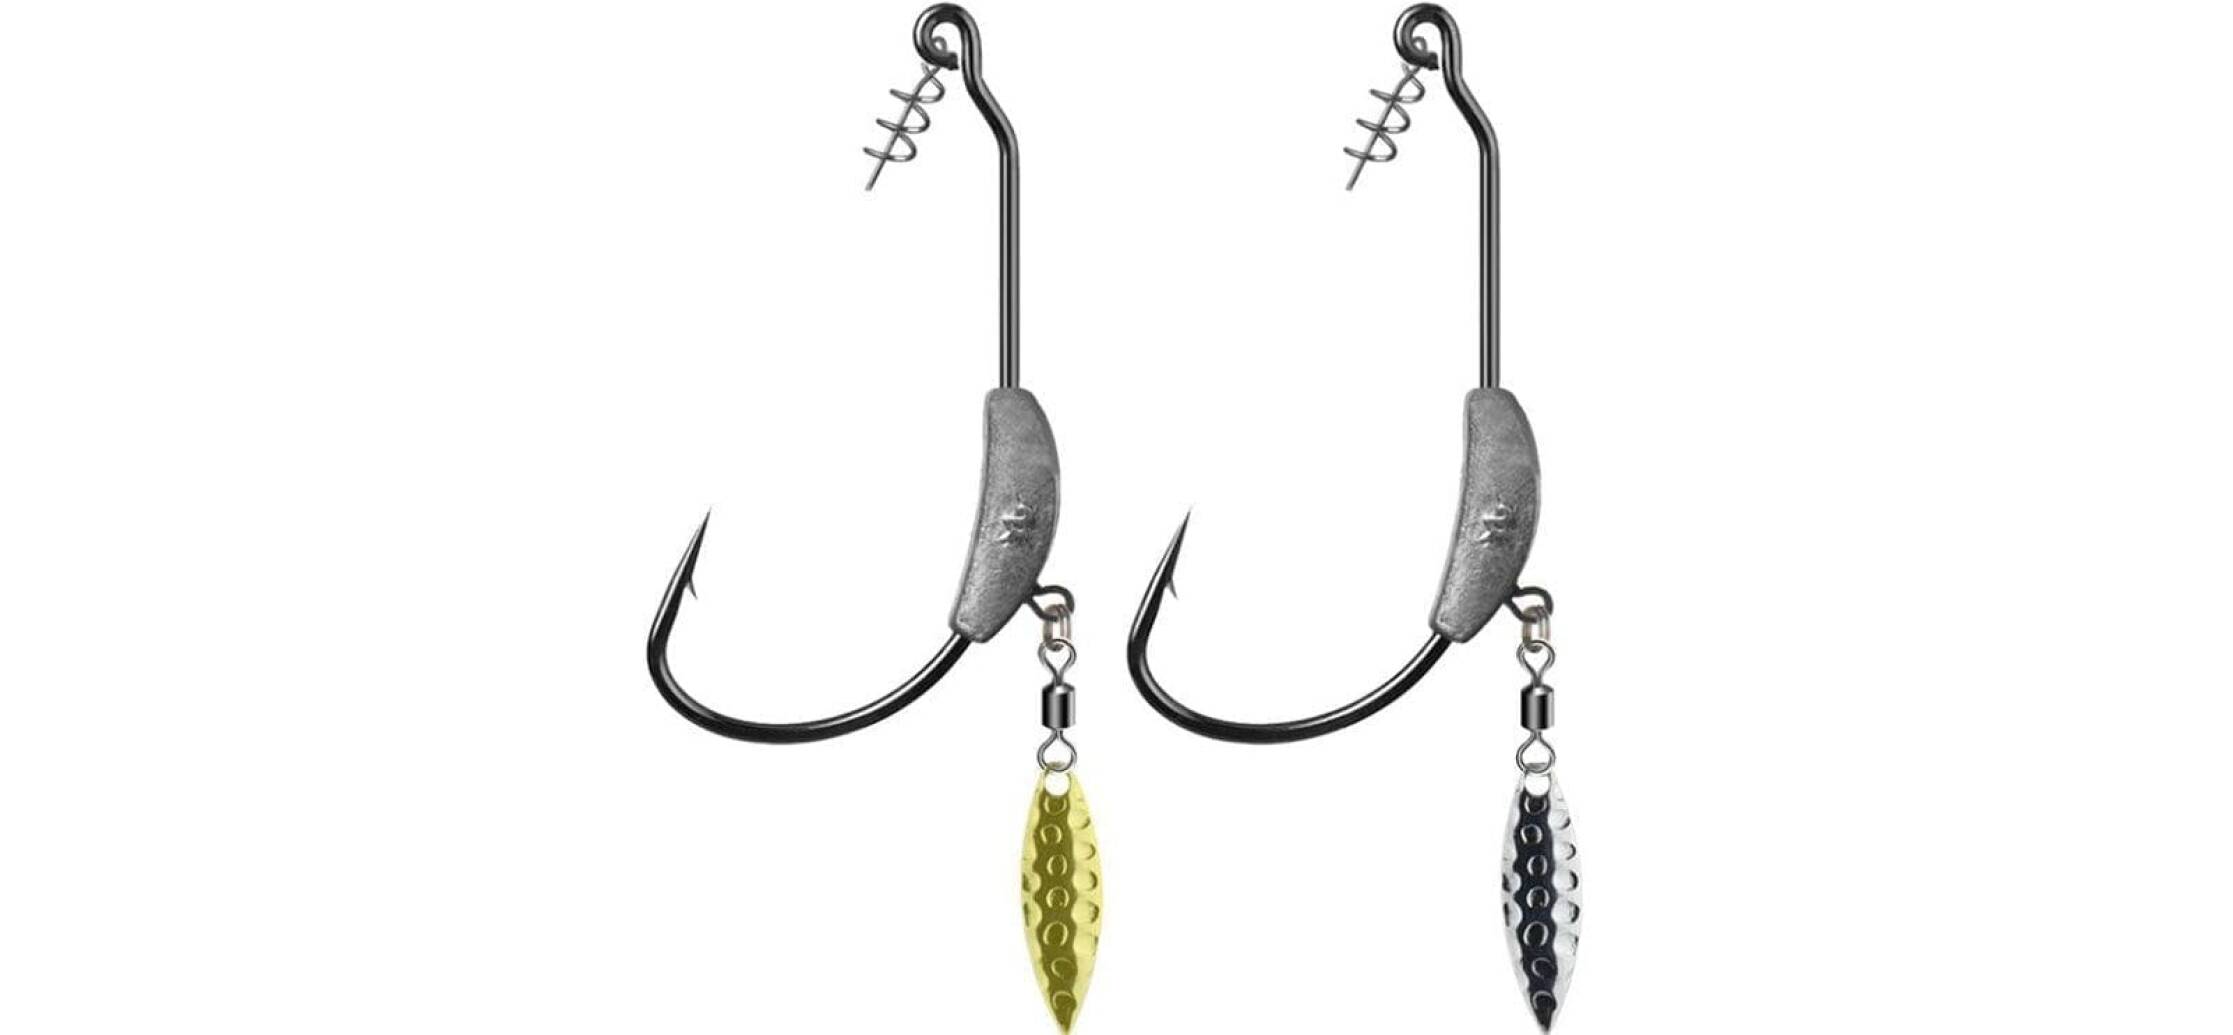 Offset Fishing Hooks 4G 5g 7g Crank Hook med sked Soft Beten Lägg Lead Crank Hook med bly Sinker metallsked Sequins